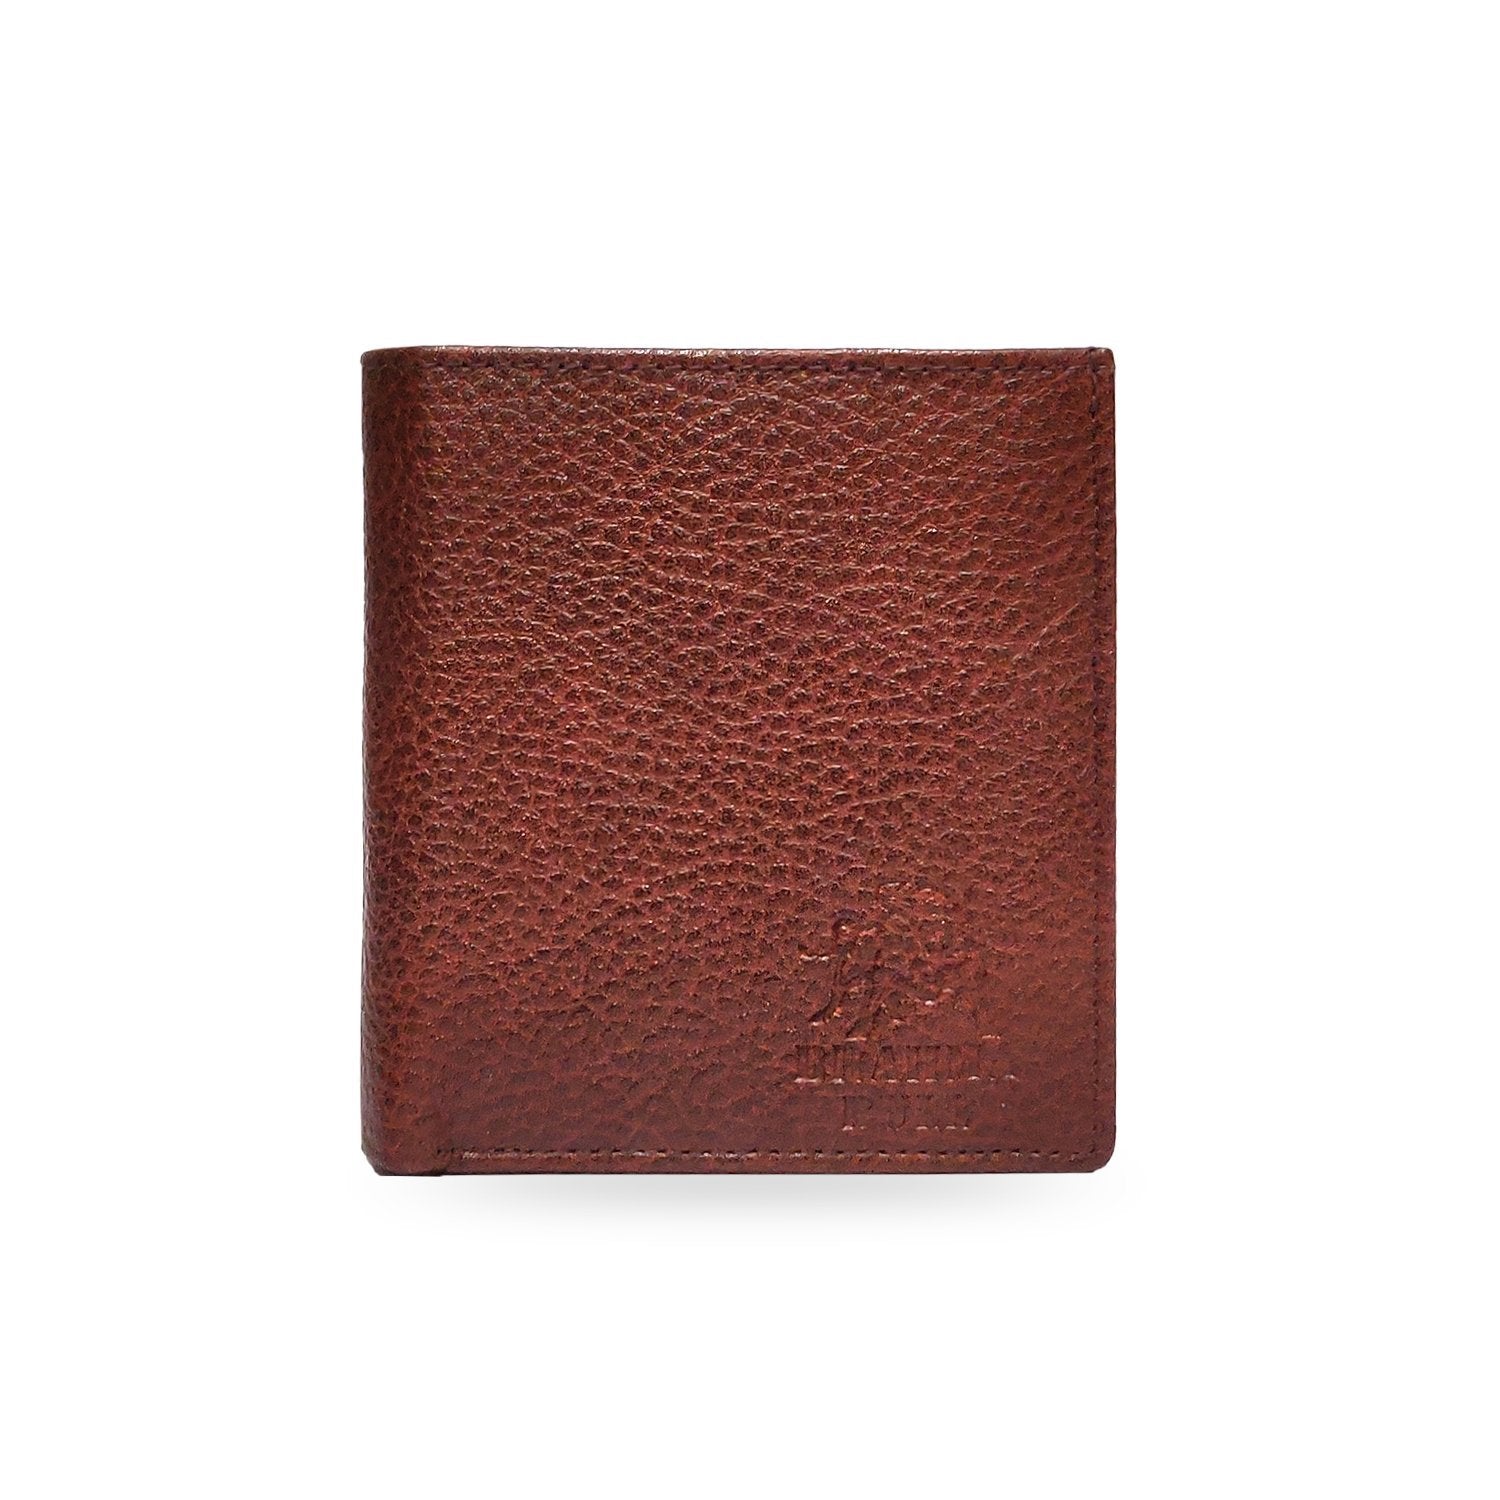 Brahma Bull Side Fold RFID Brown Leather Wallet - Brahma Bull - Men's Grooming